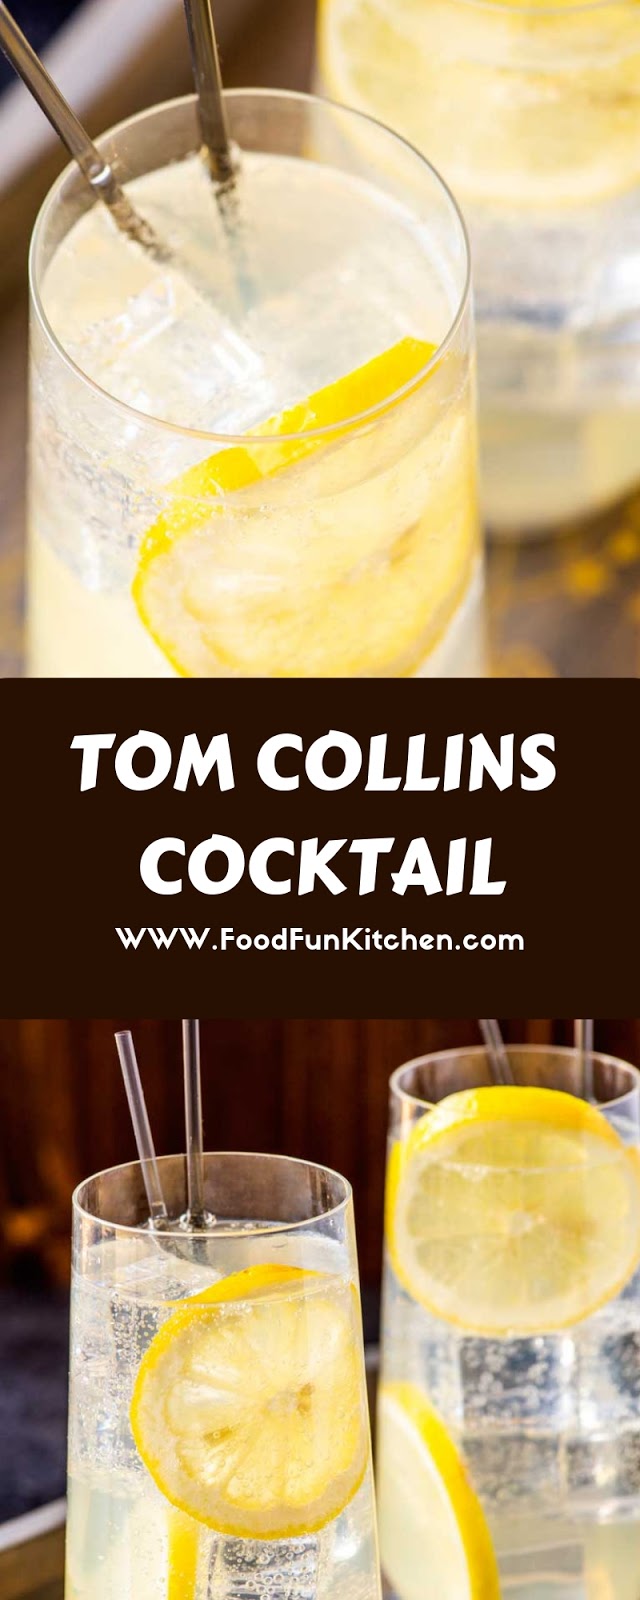 TOM COLLINS COCKTAIL